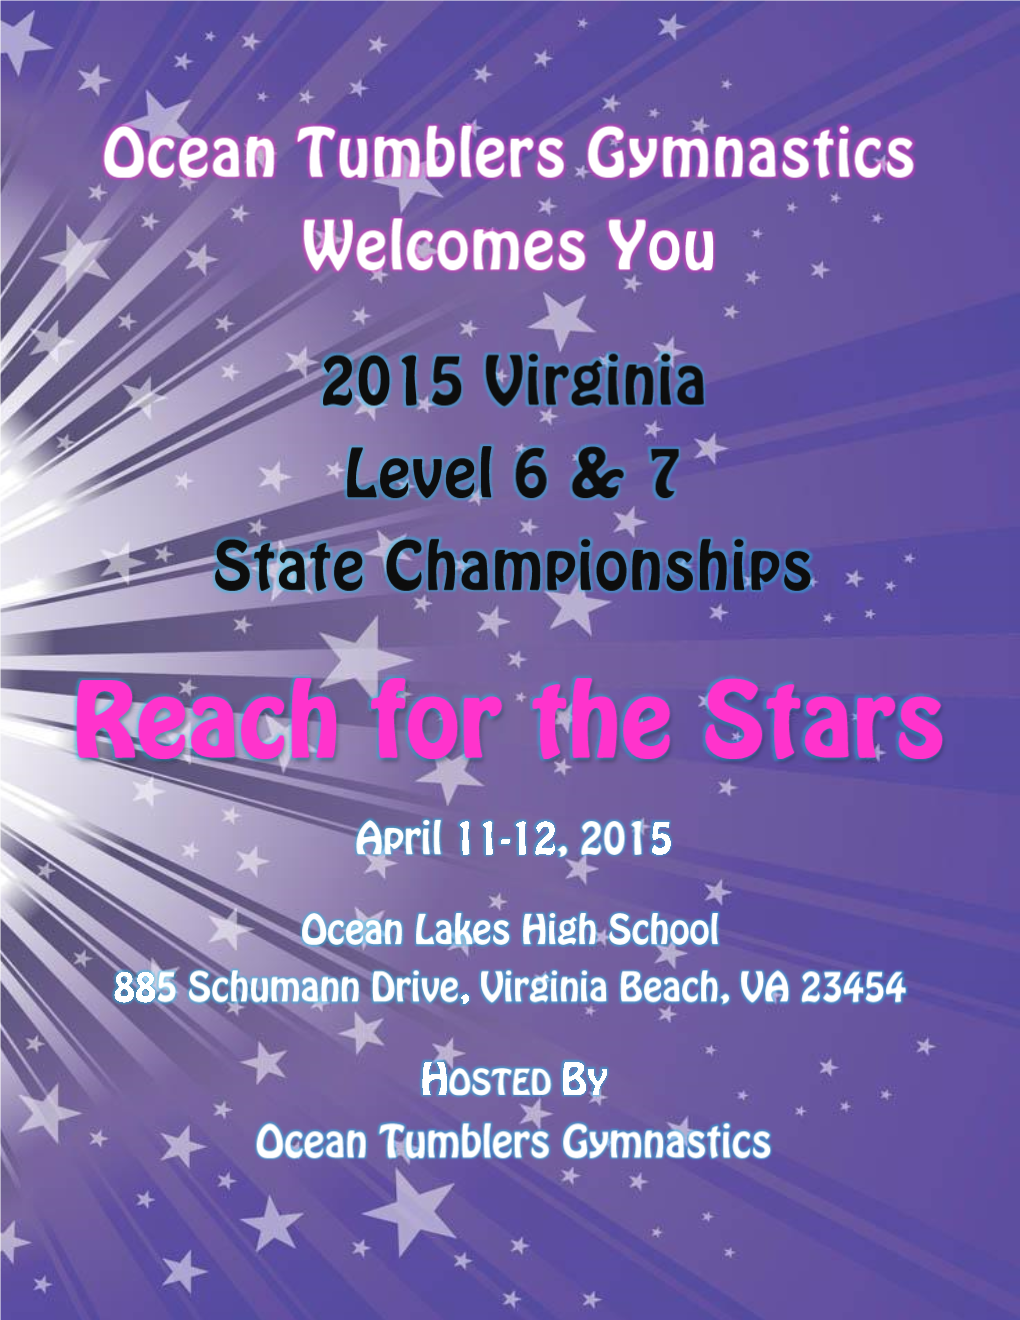 2015 Virginia USA Gymnastics Level 6 & 7 State Championships